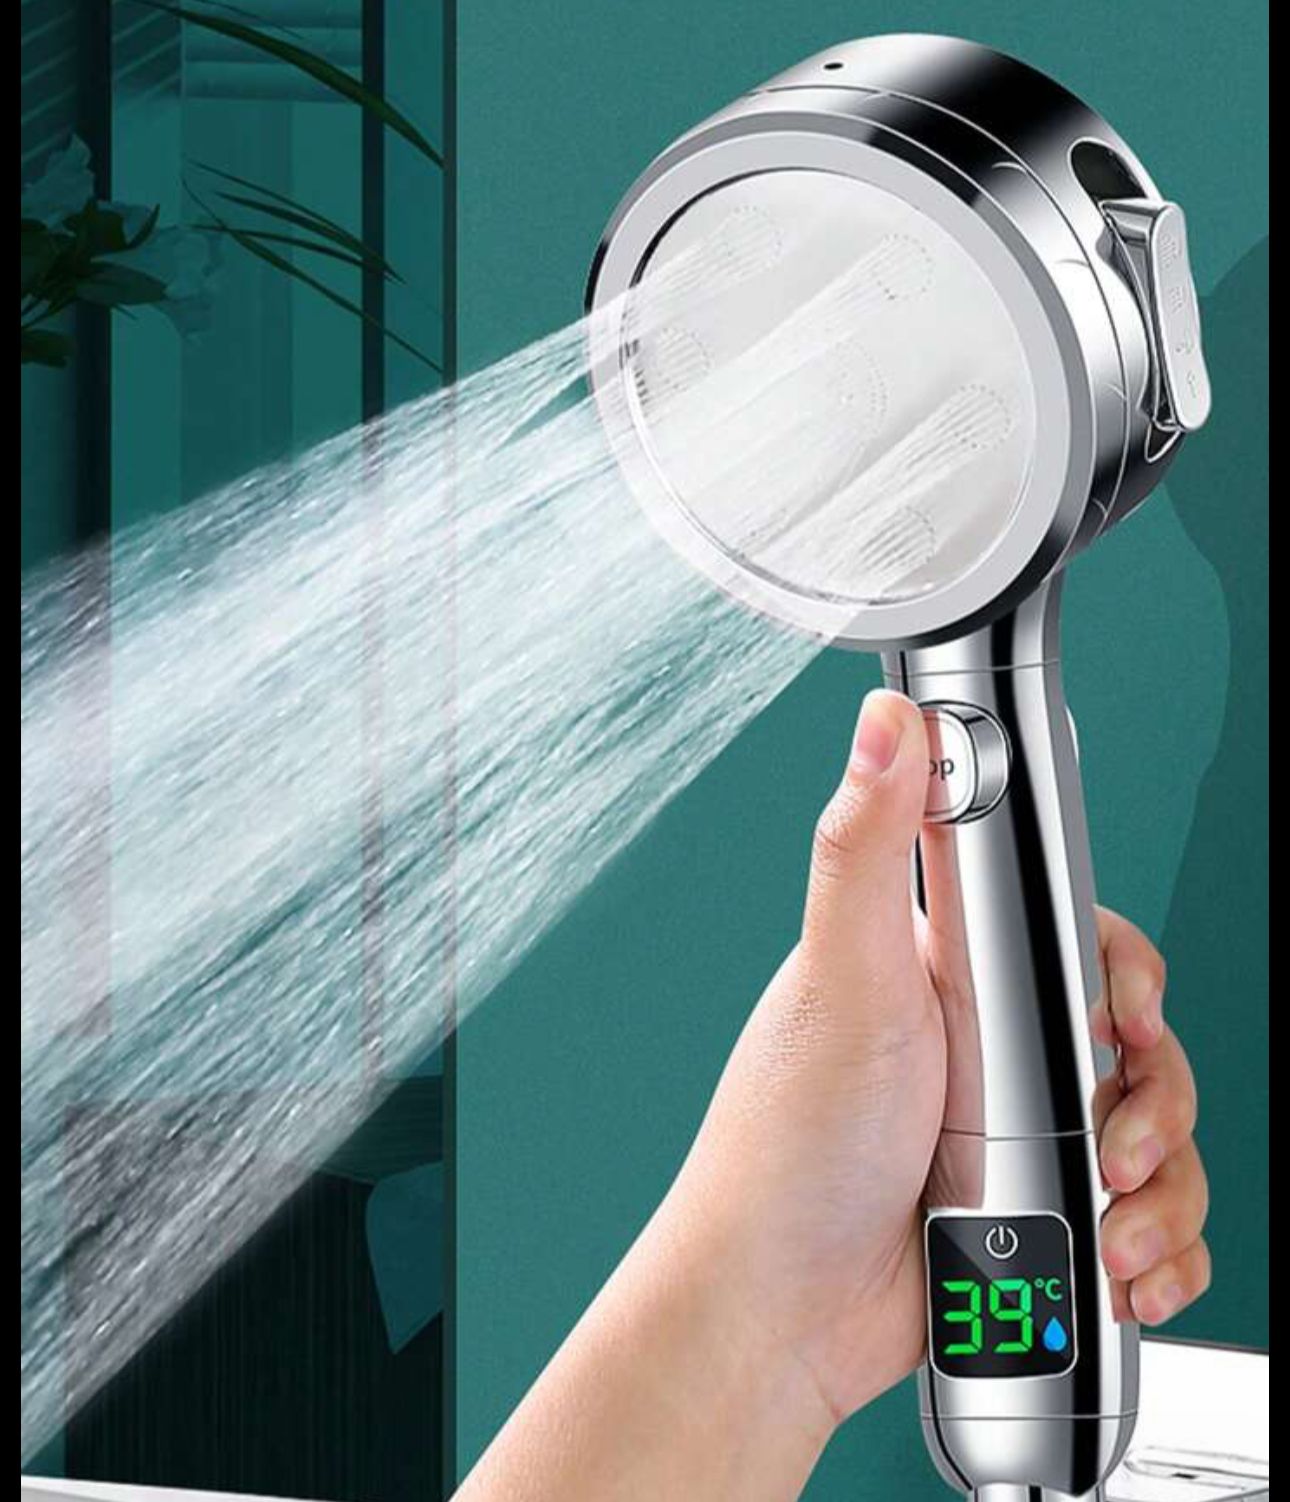 Cabezal de ducha con indicador led de temperatura